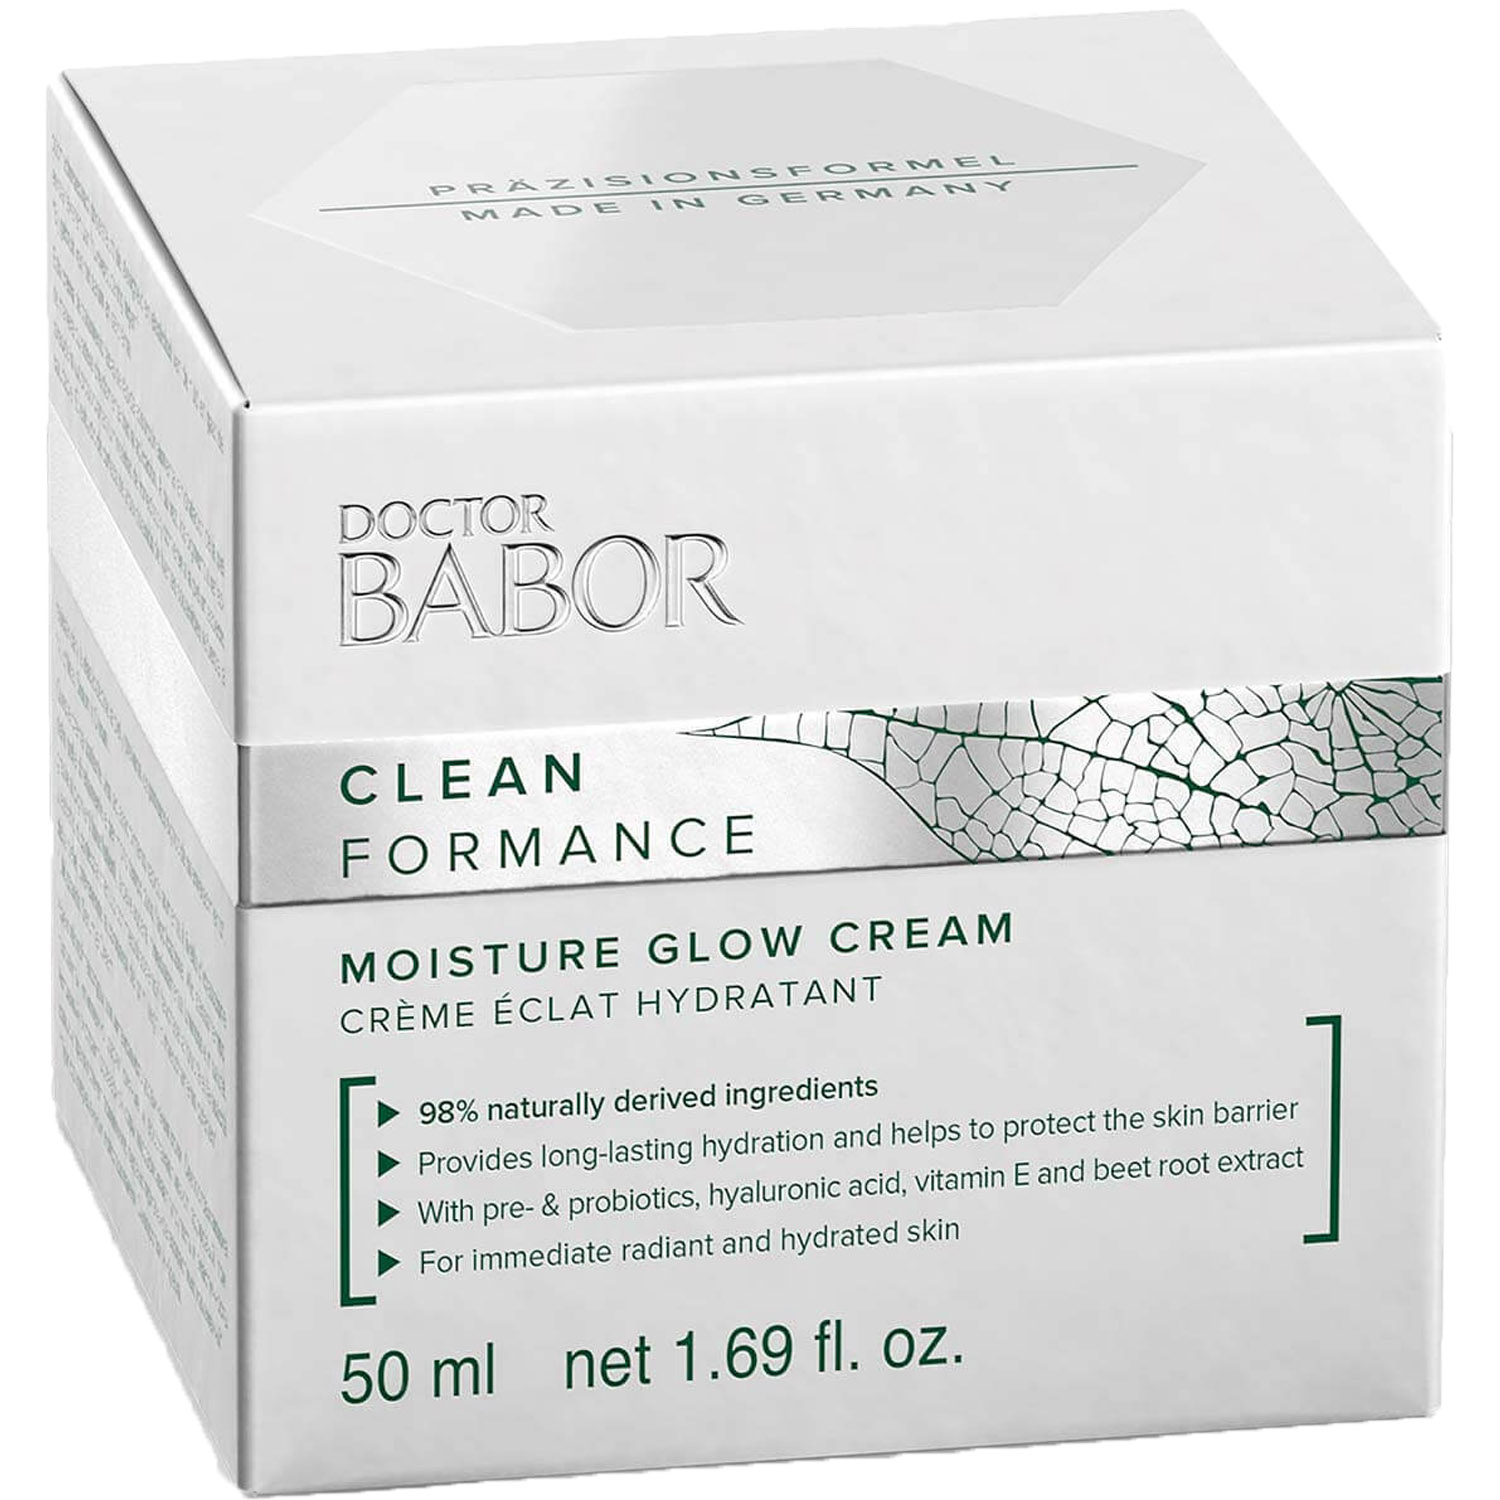 Увлажняющий крем Babor Doctor Babor Clean Formance Moisture Glow, 50 мл - фото 1